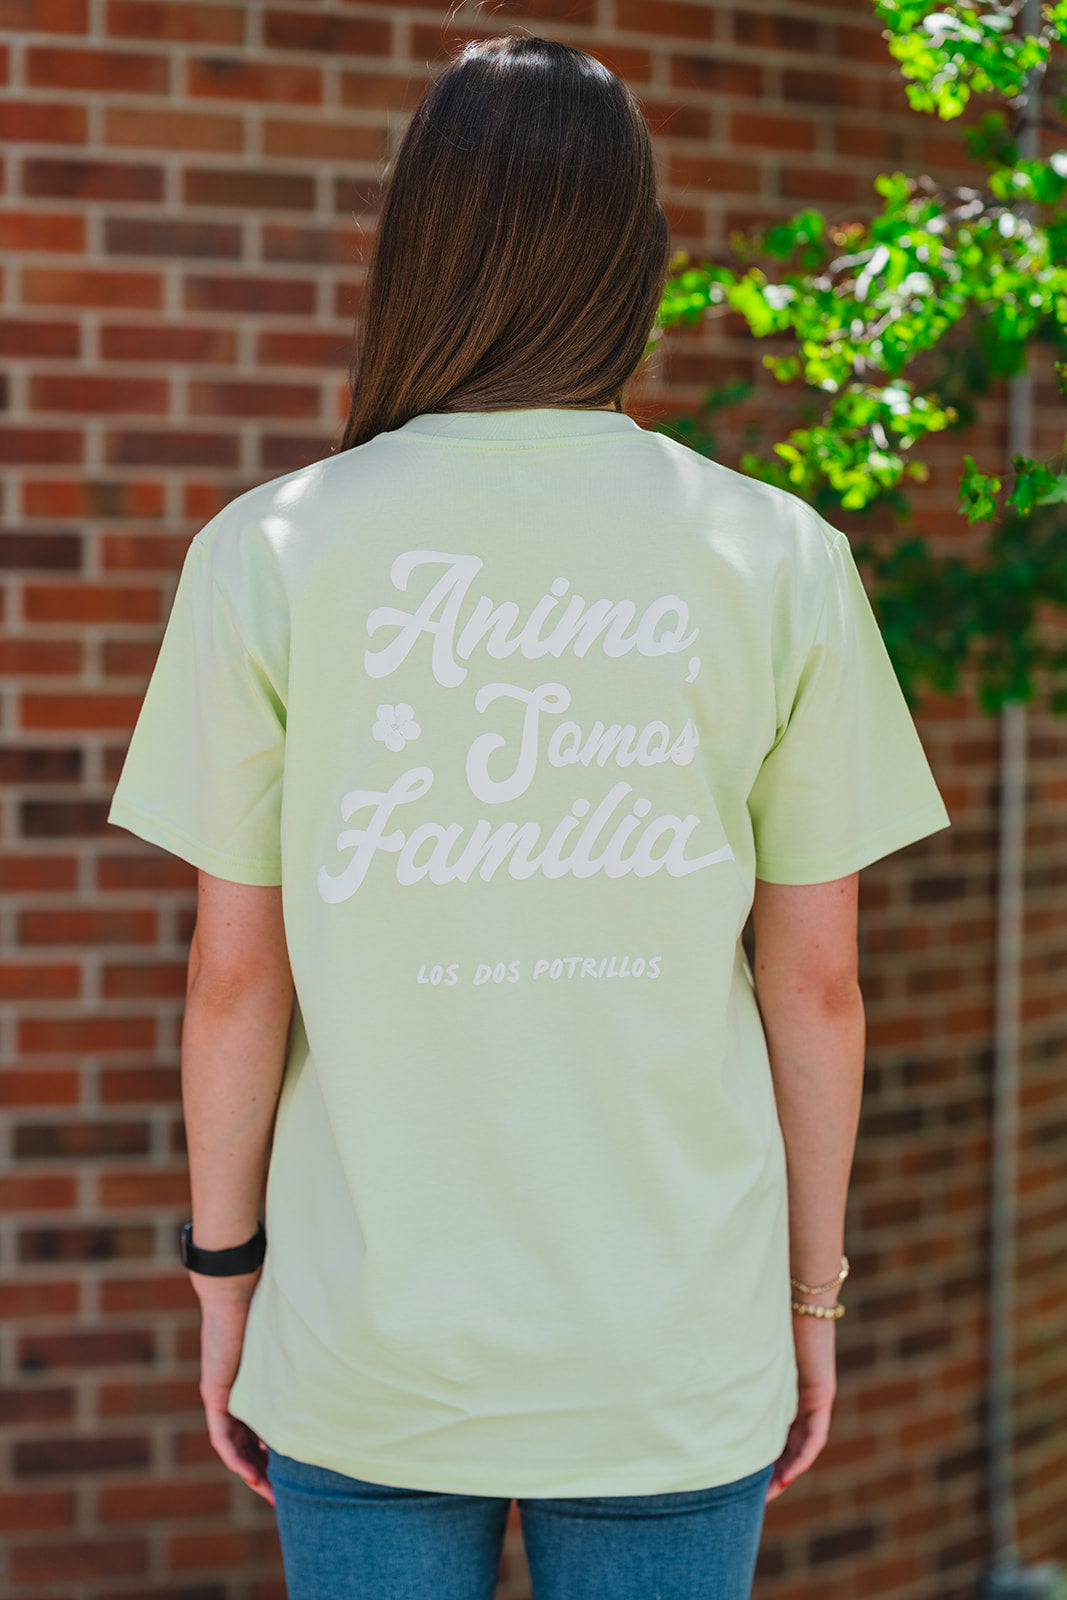 Animo, Somos Familia T-Shirt